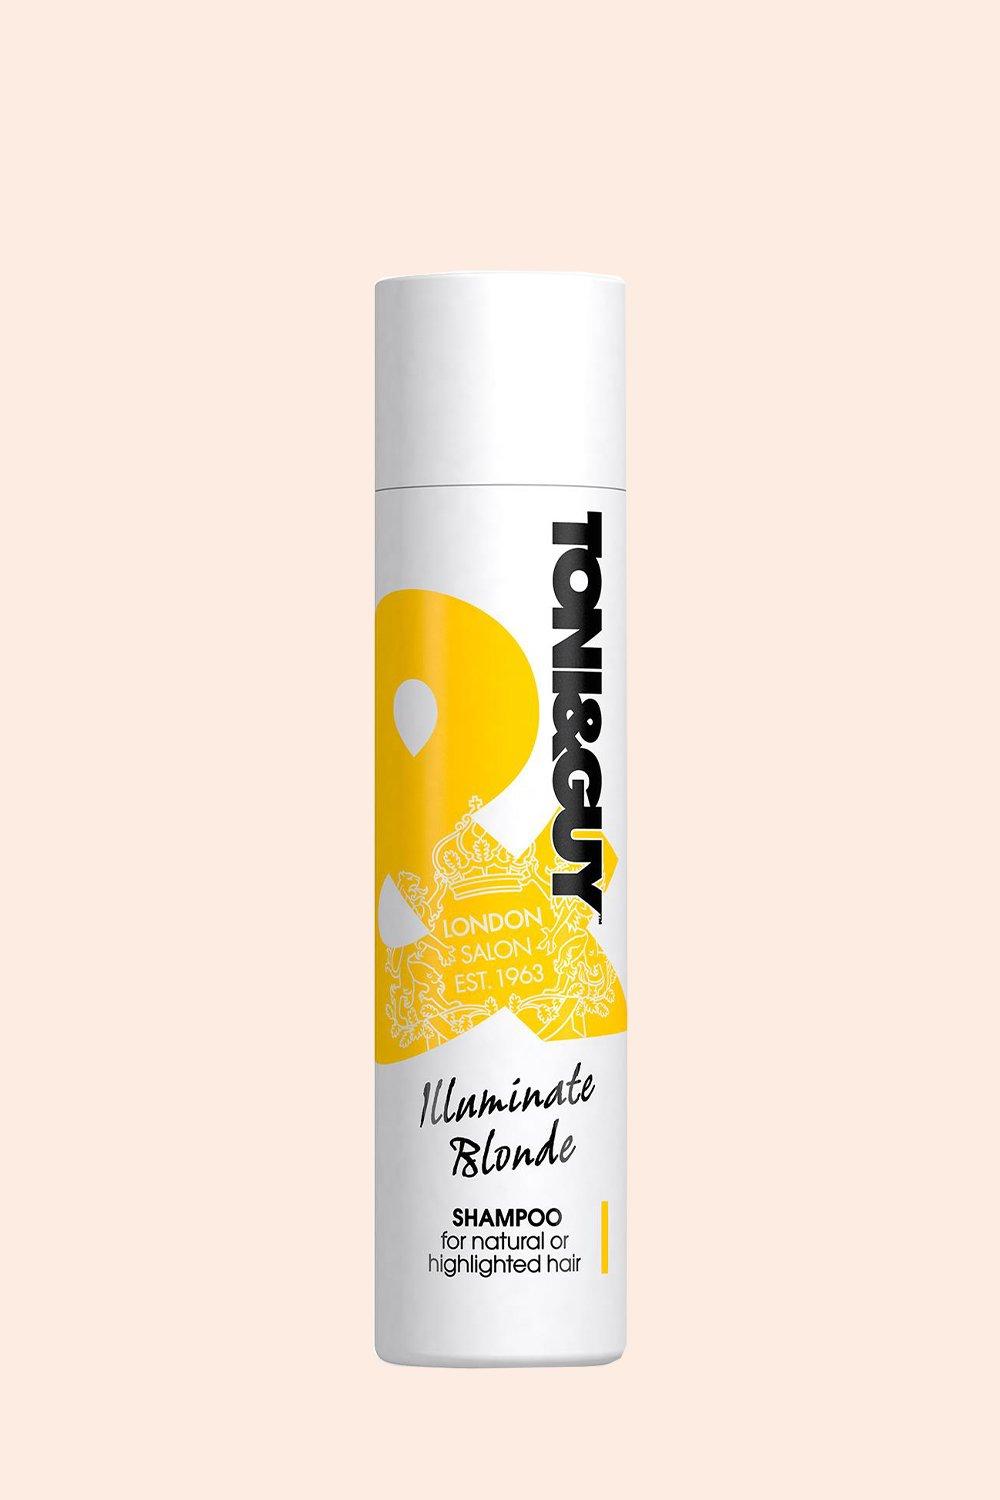 Illuminate blonde shampoo for natural or highlighted hair, 250ml